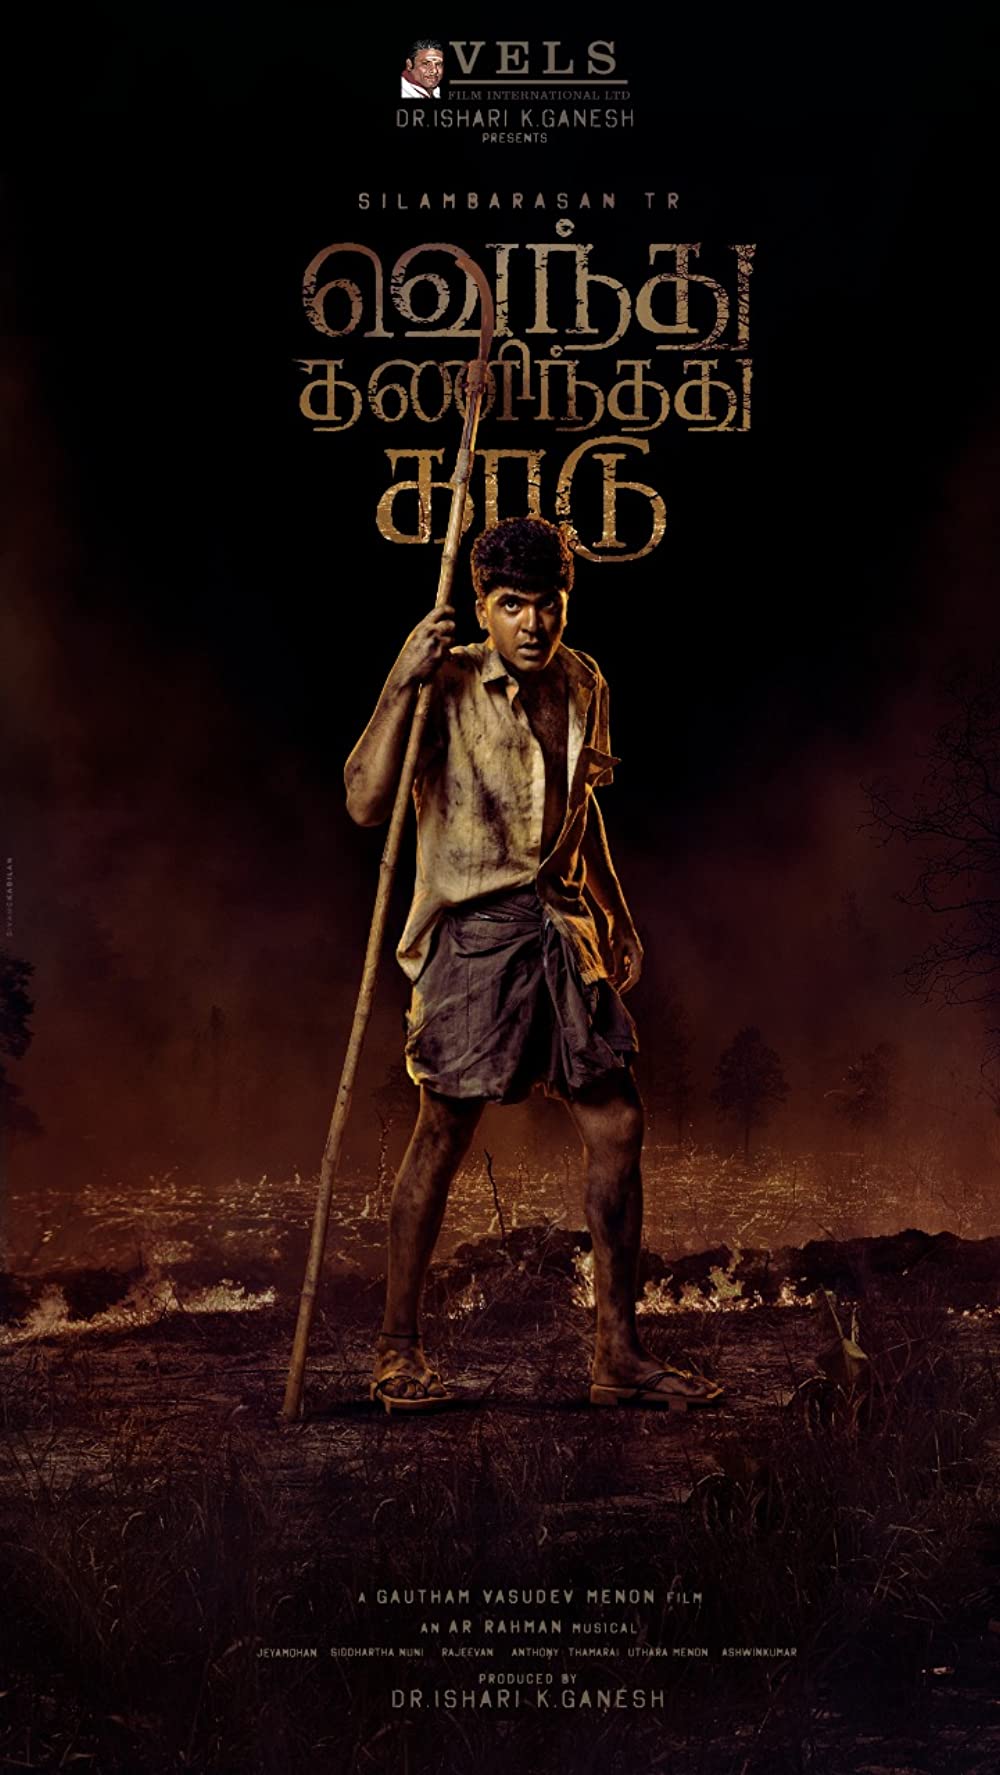 Vendhu Thanindhathu Kaadu Movie Review | Vendhu Thanindhathu Kaadu Filmy Rating 2022